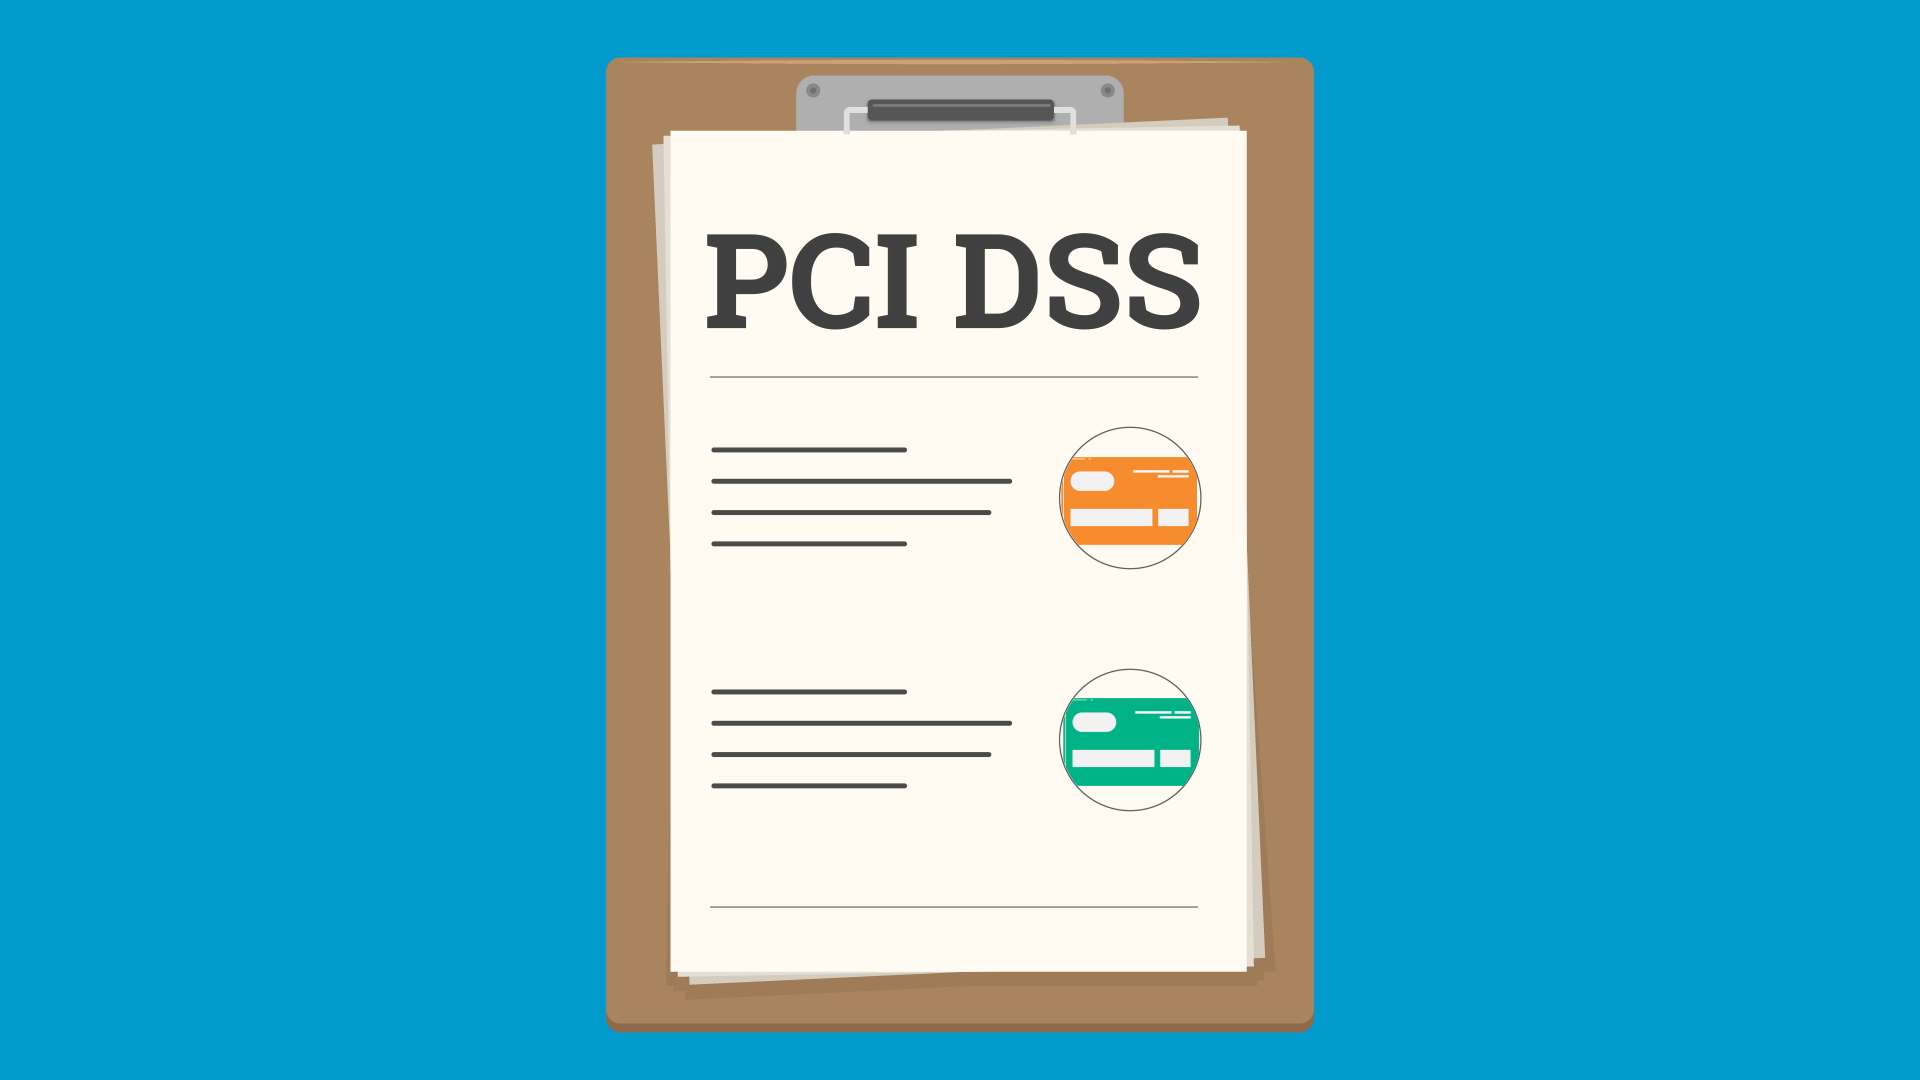 PCI DSS: Transaction Types